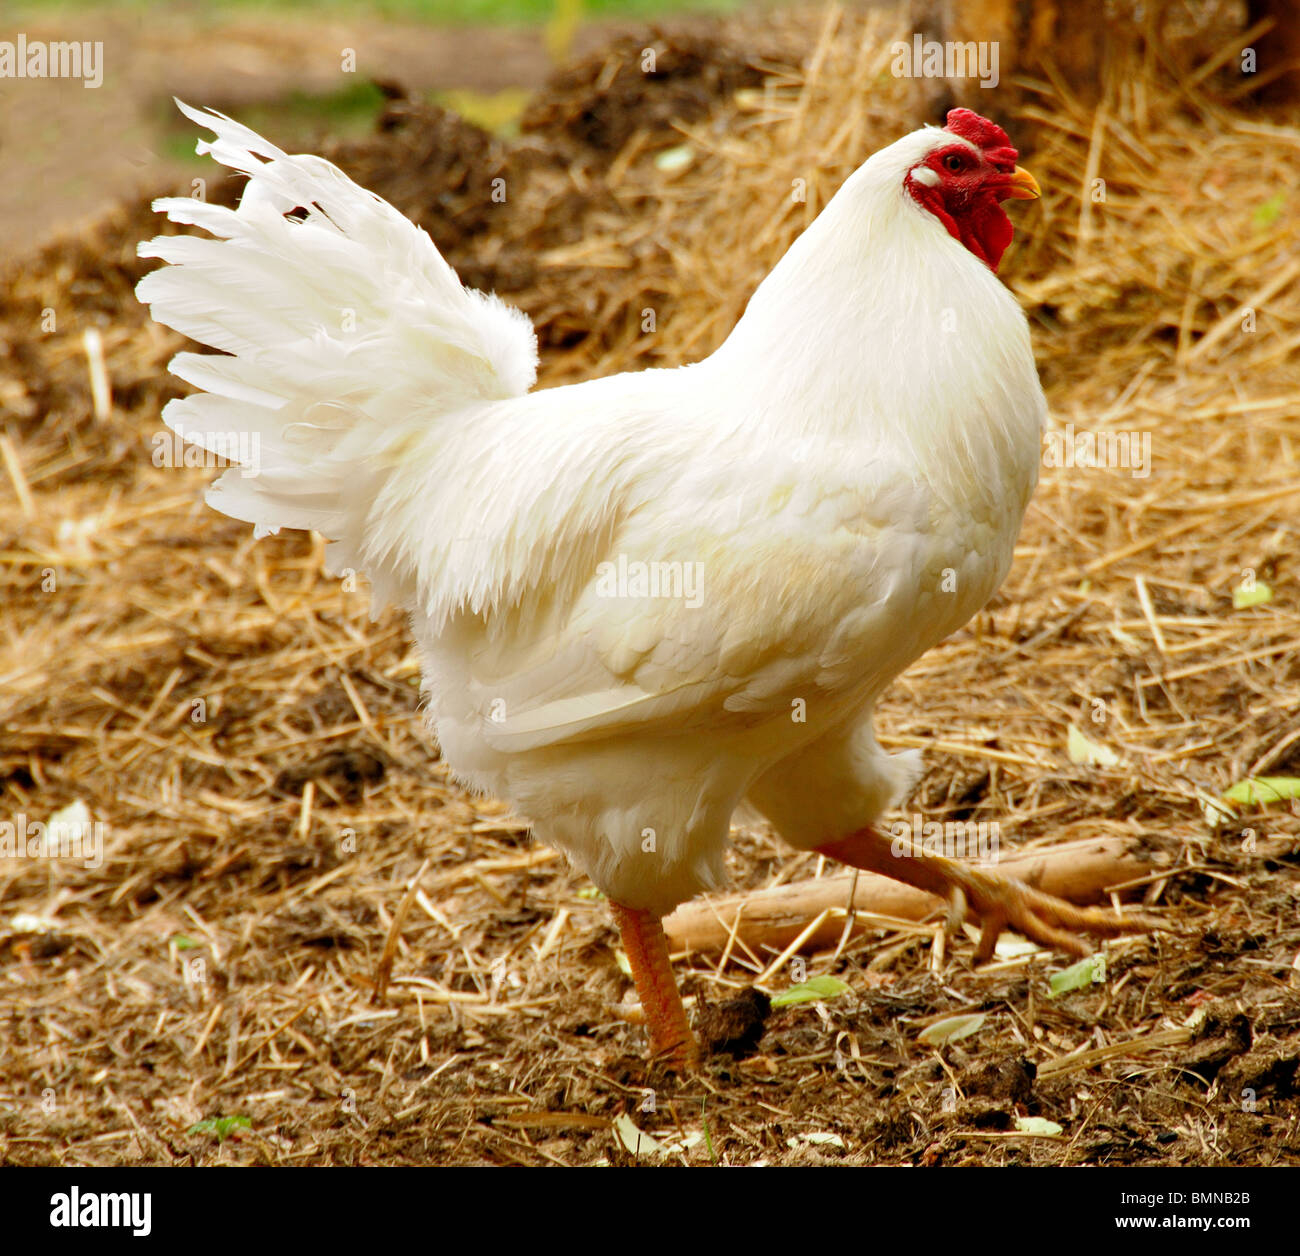 Caminando a través de gallo blanco paja barnyard Foto de stock